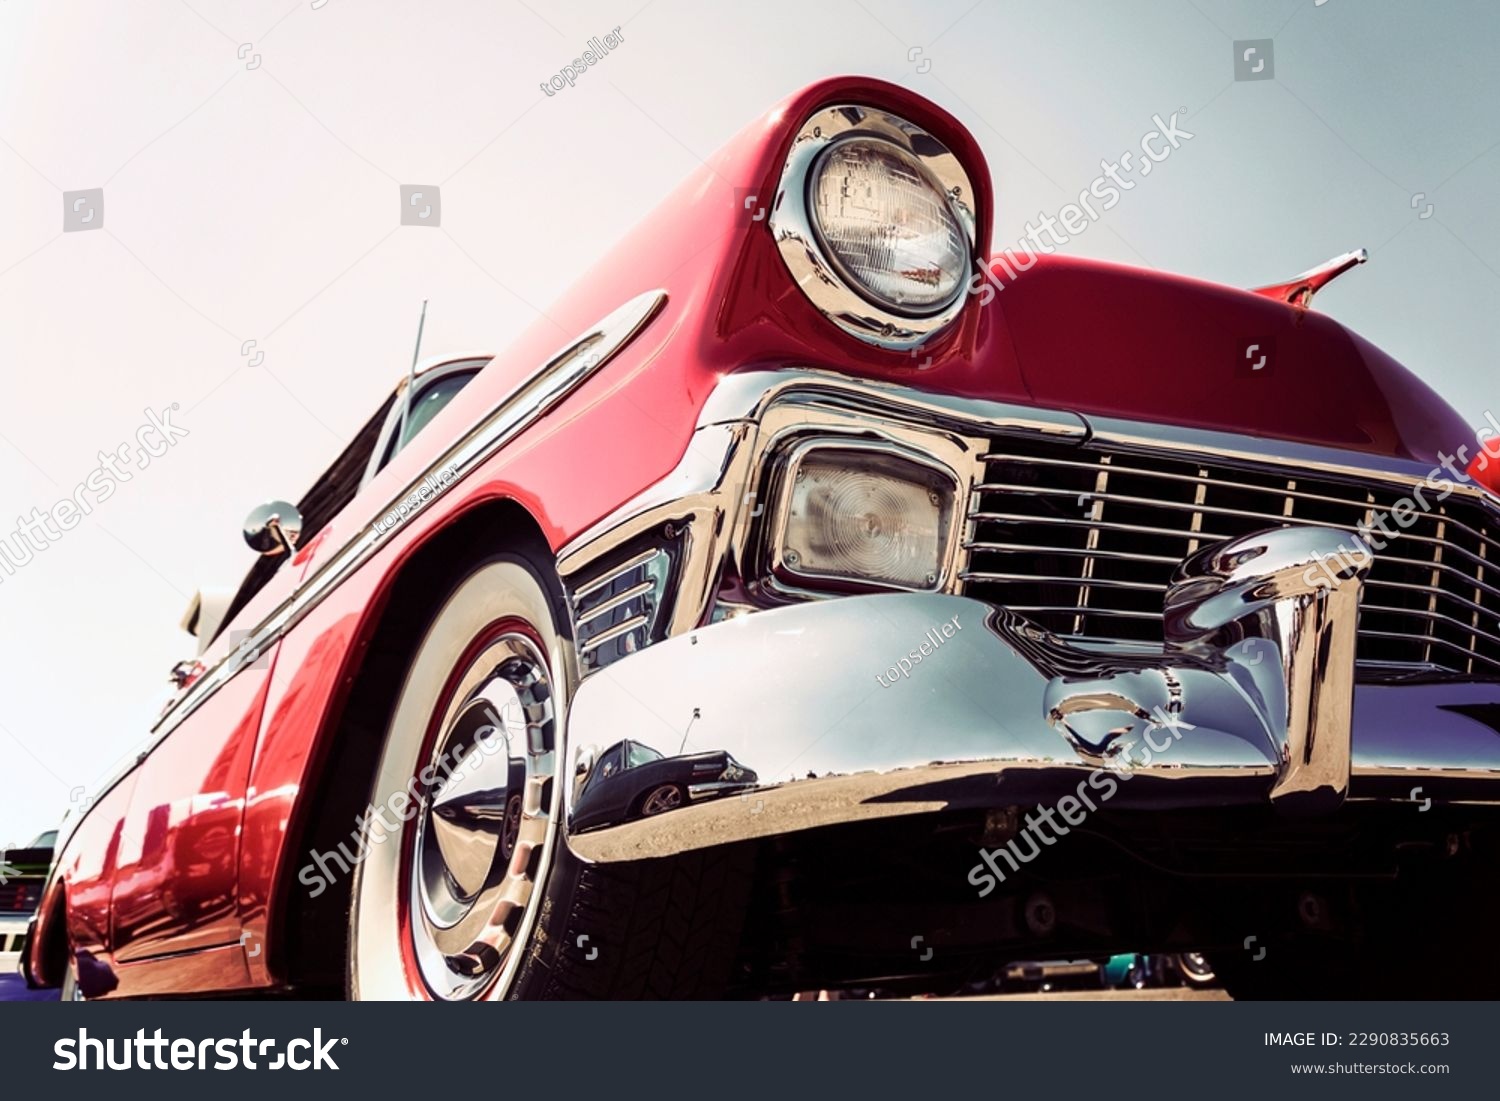 Headlight of a classic american car #2290835663